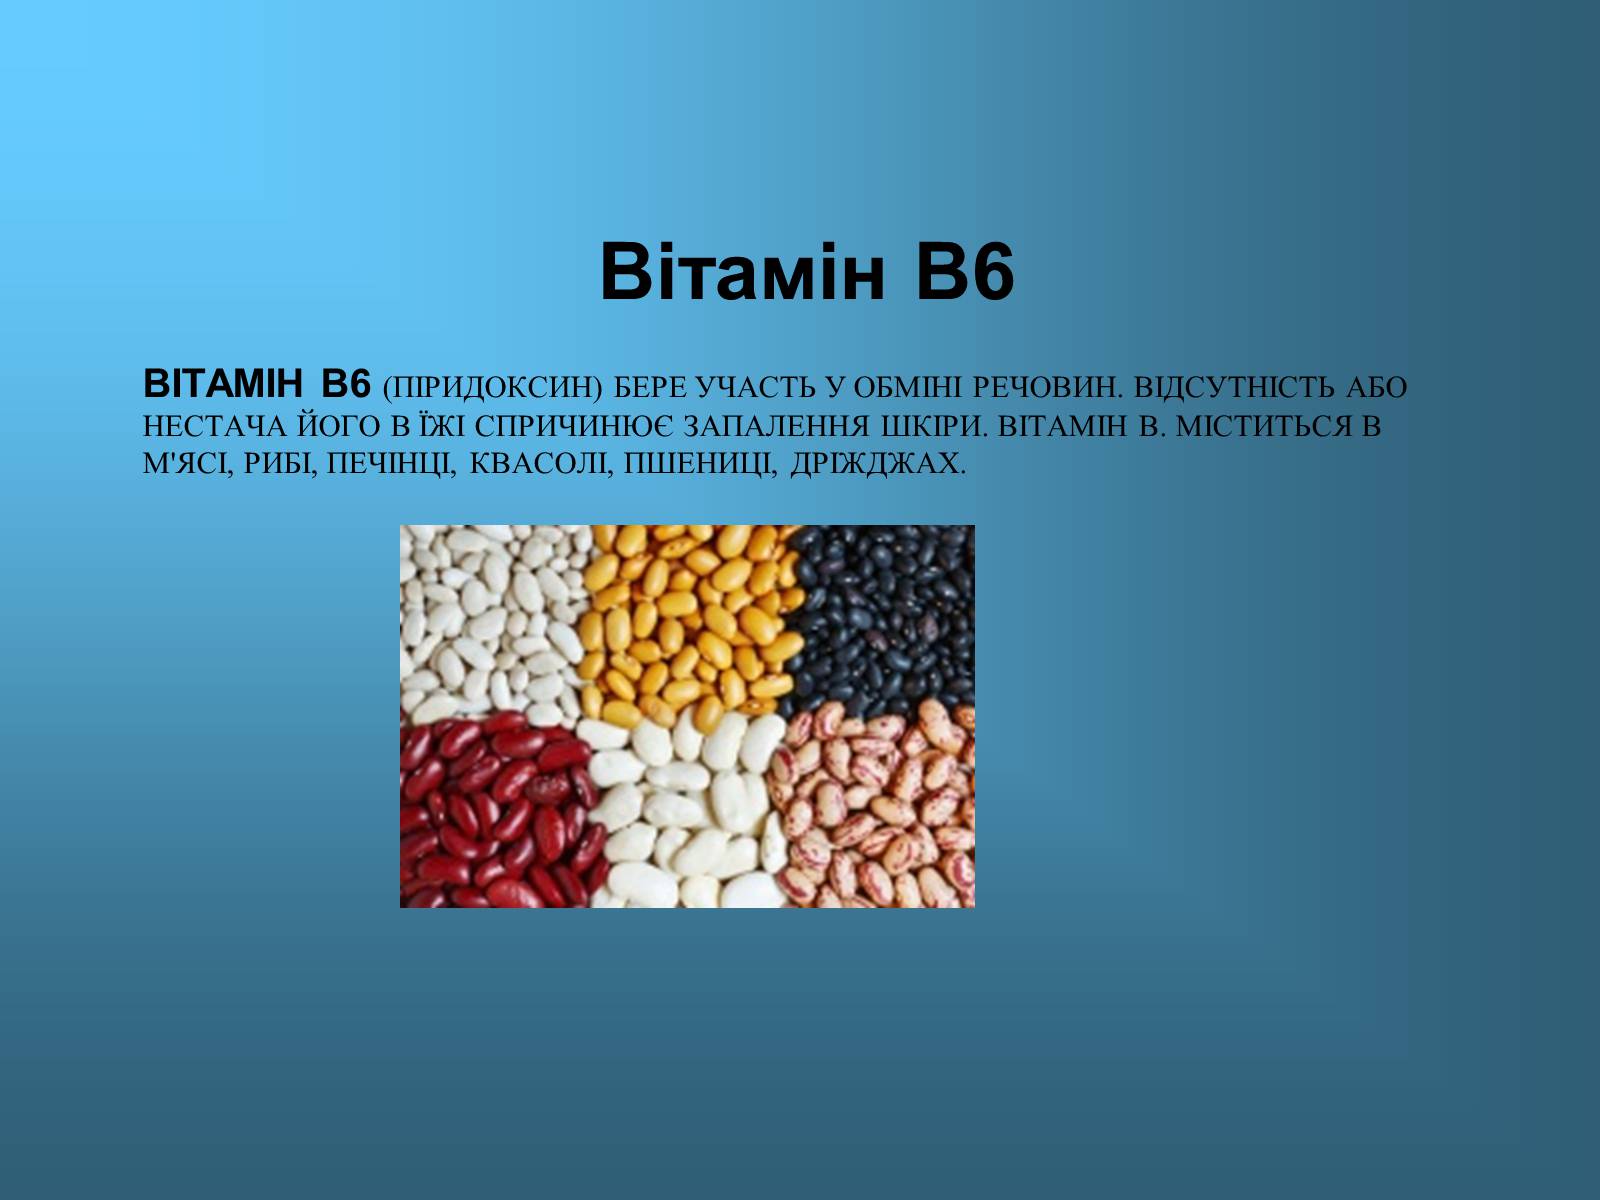 6988 НЕЙРОБІОН - Vitamin B1 in combination with vitamin B6 and/or vitamin B12